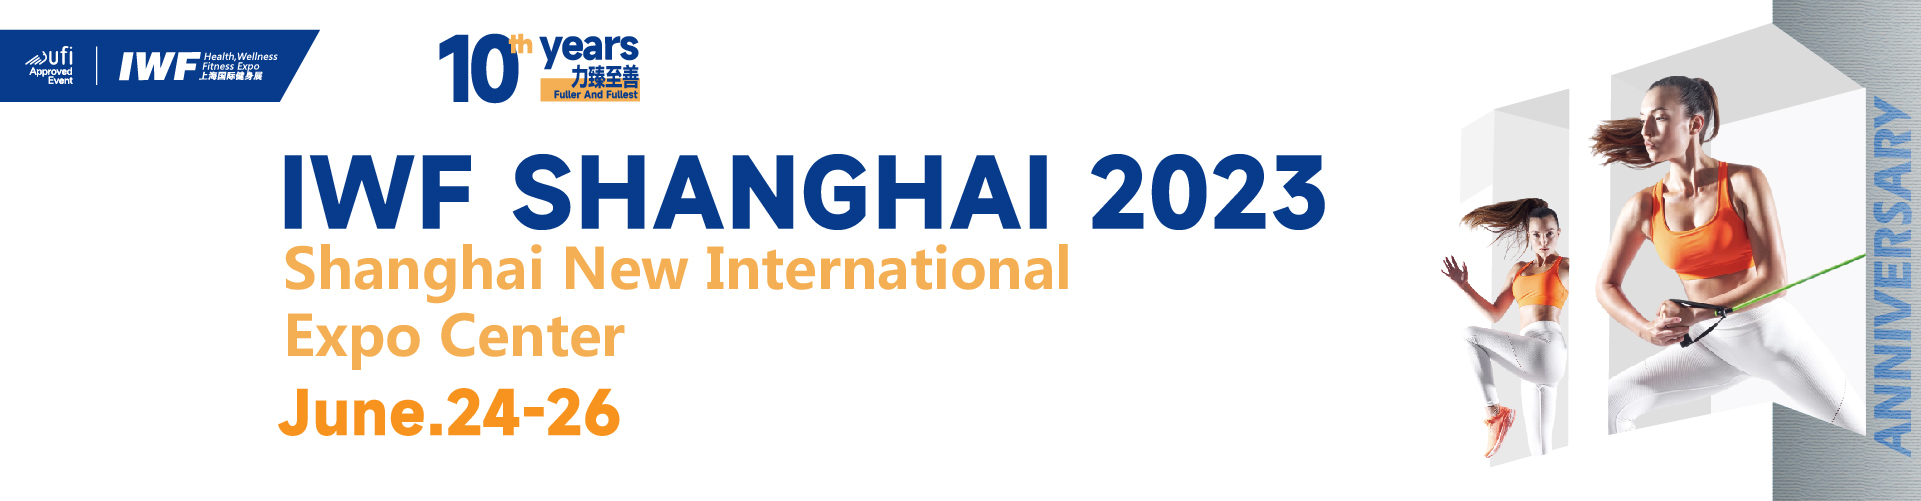 IWF SHANGHAI FITNESS EXPO